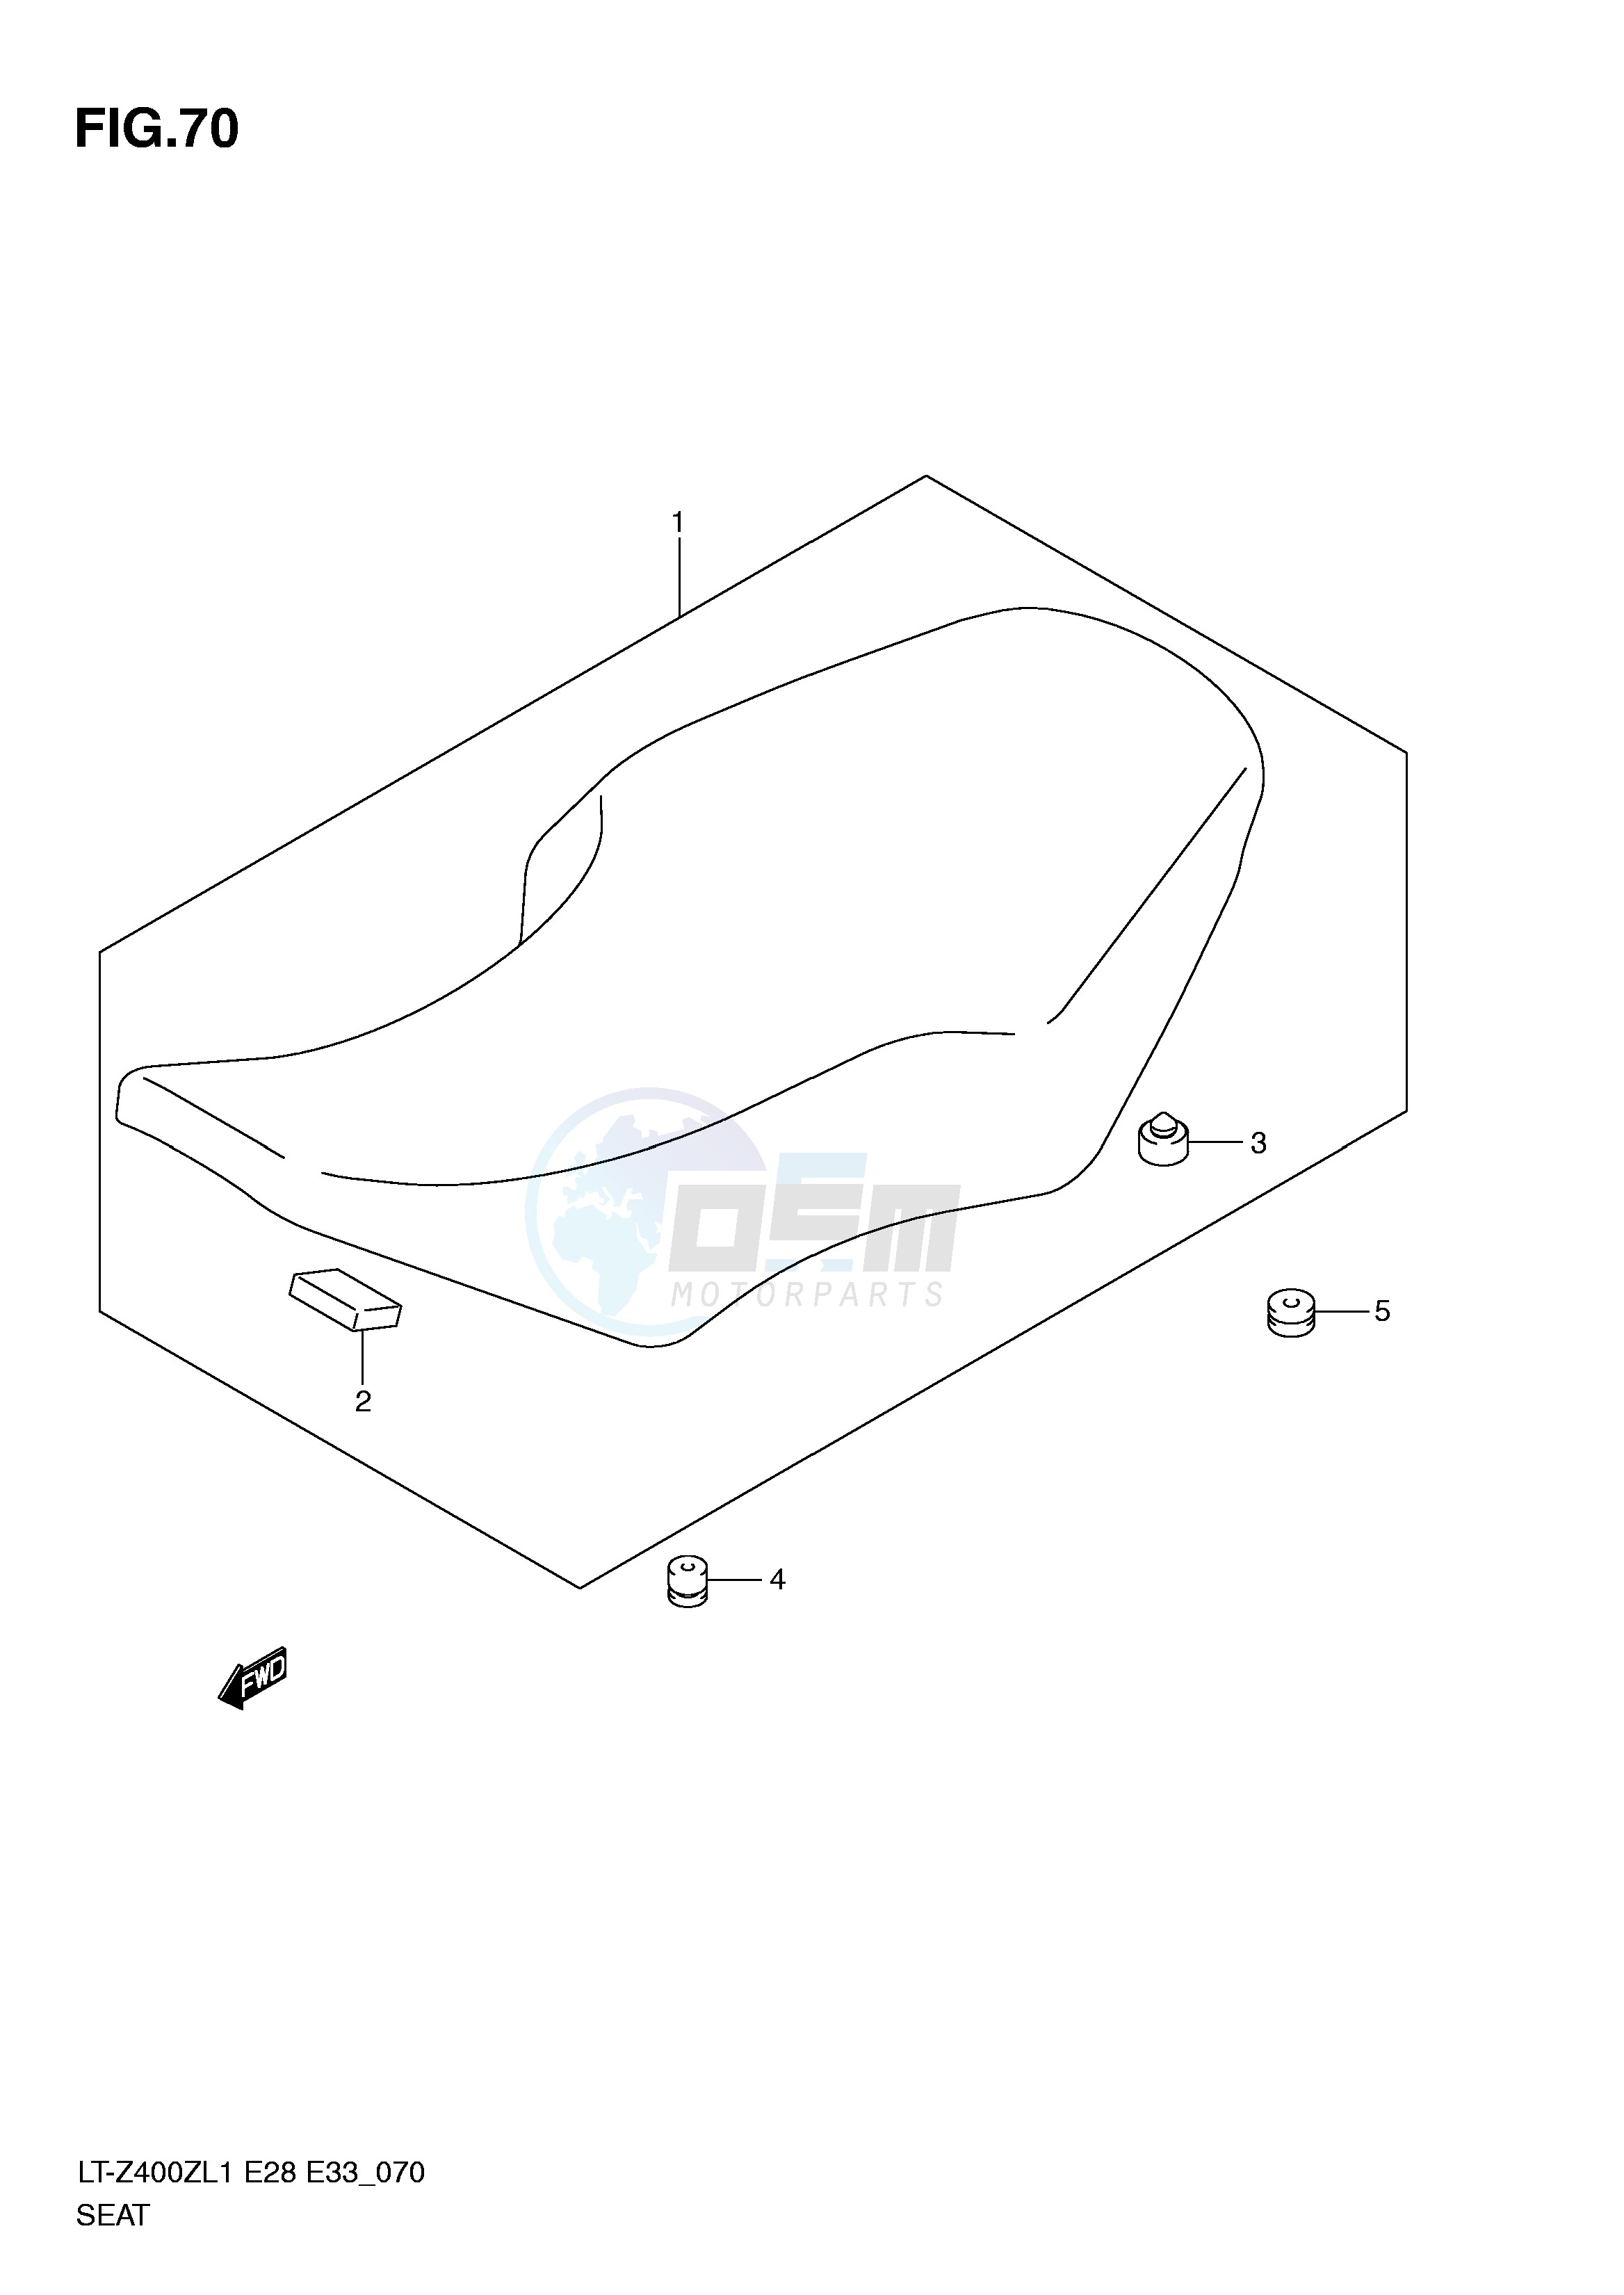 SEAT (LT-Z400ZL1 E28) blueprint